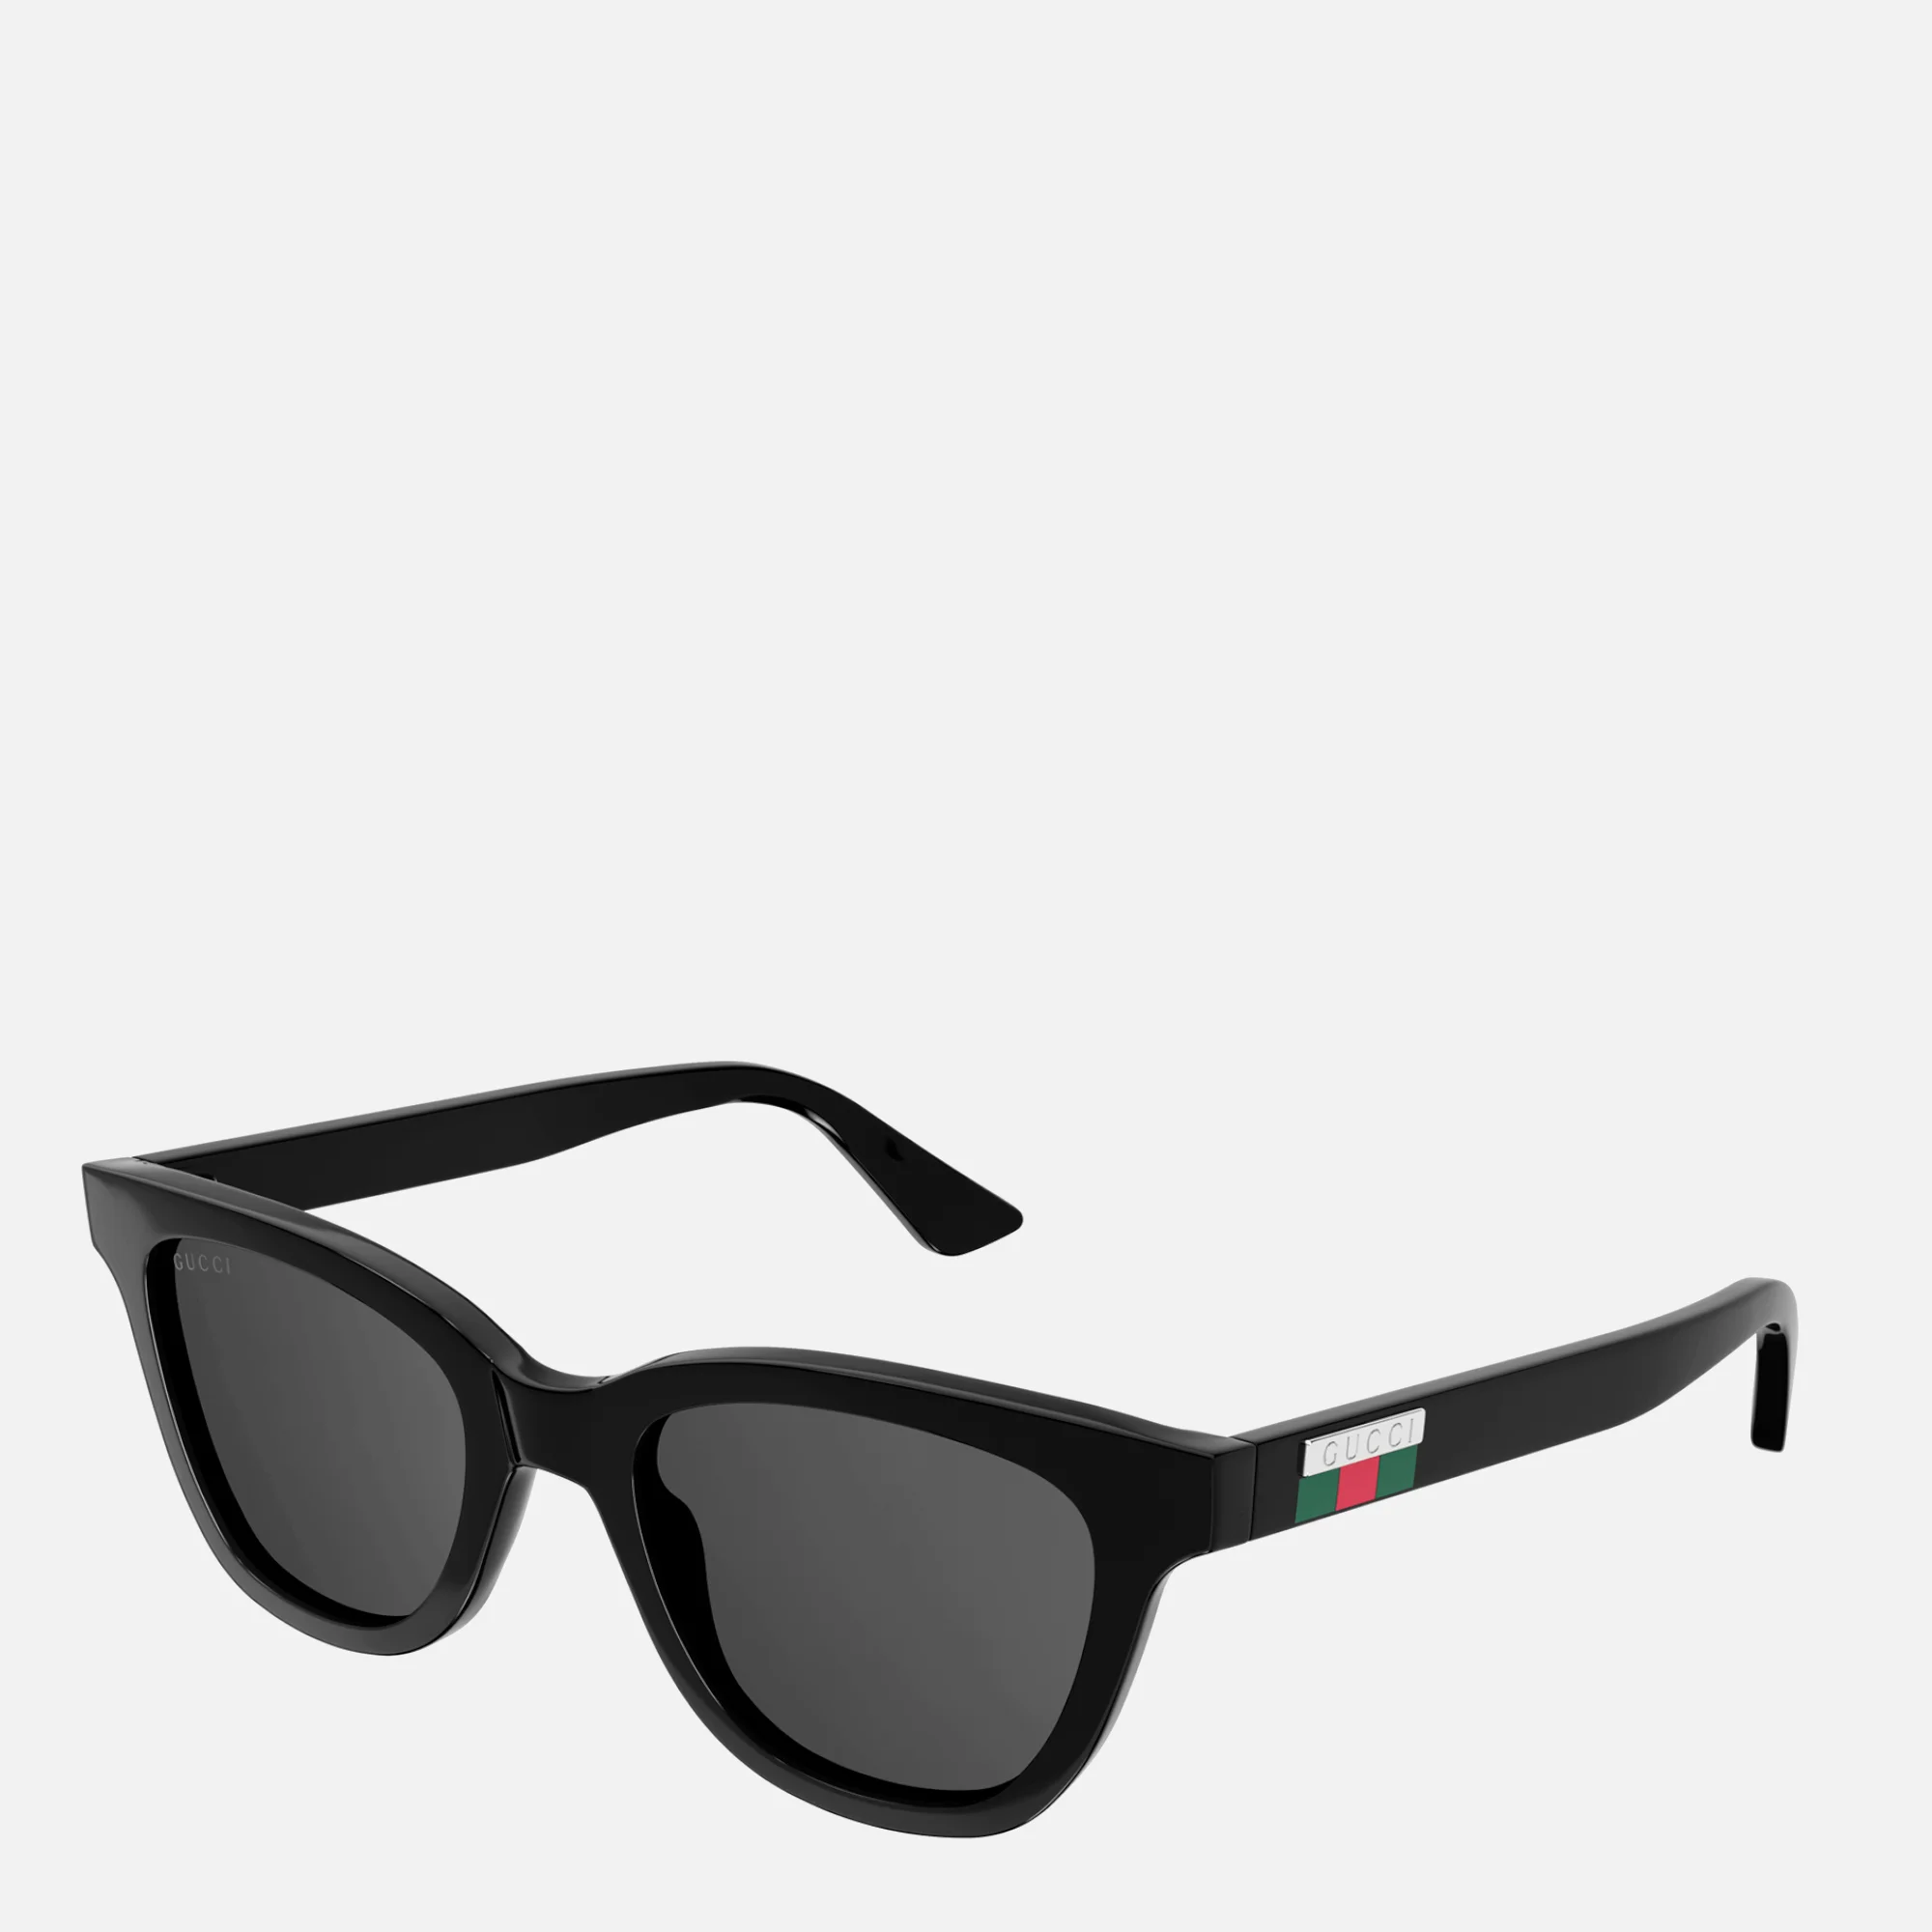 Gucci Women's Square Acetate Sunglasses - Black/Black/Grey Image 1